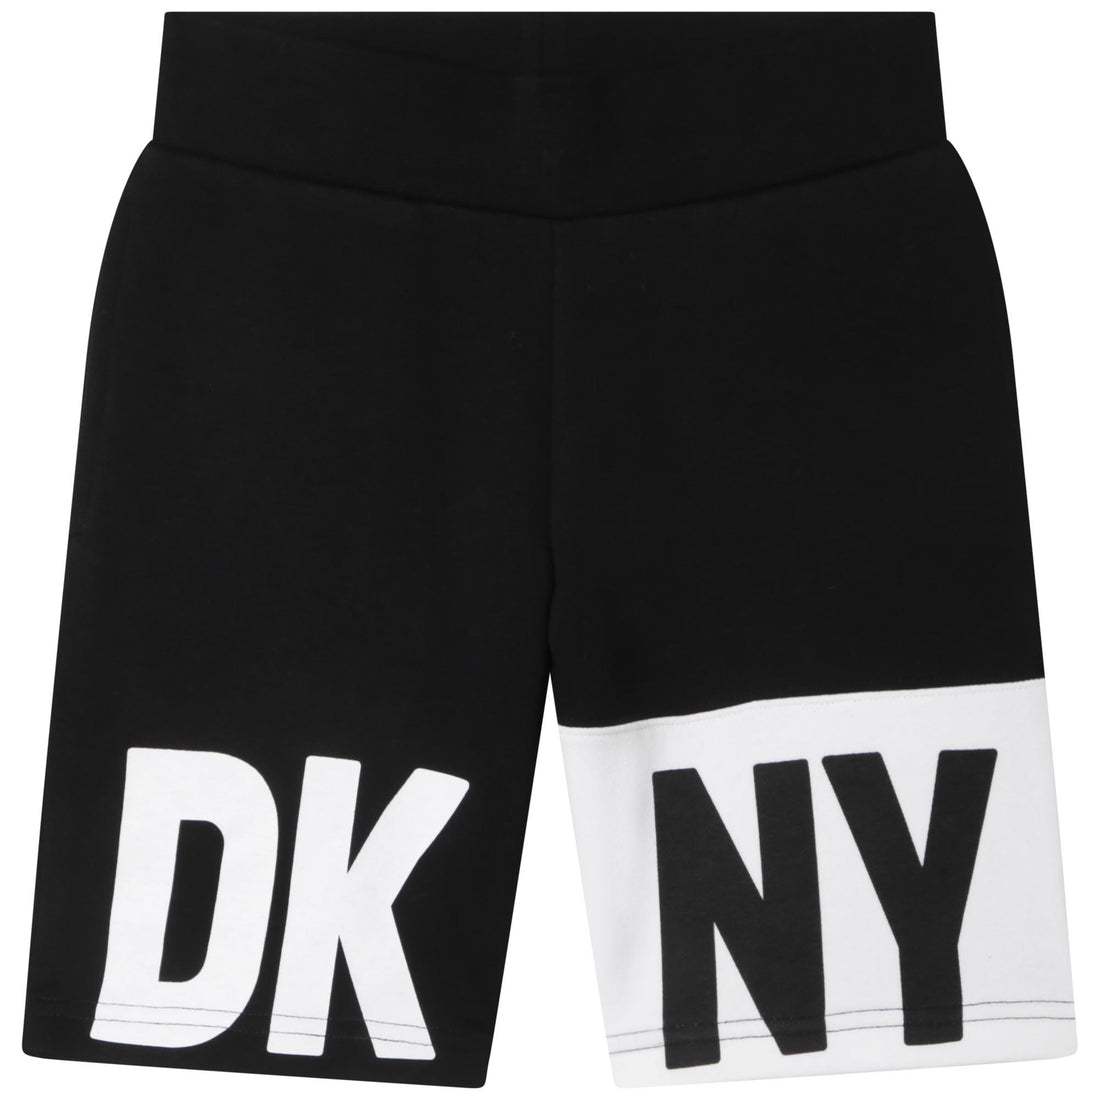 DKNY Bermuda Shorts Style: D24785